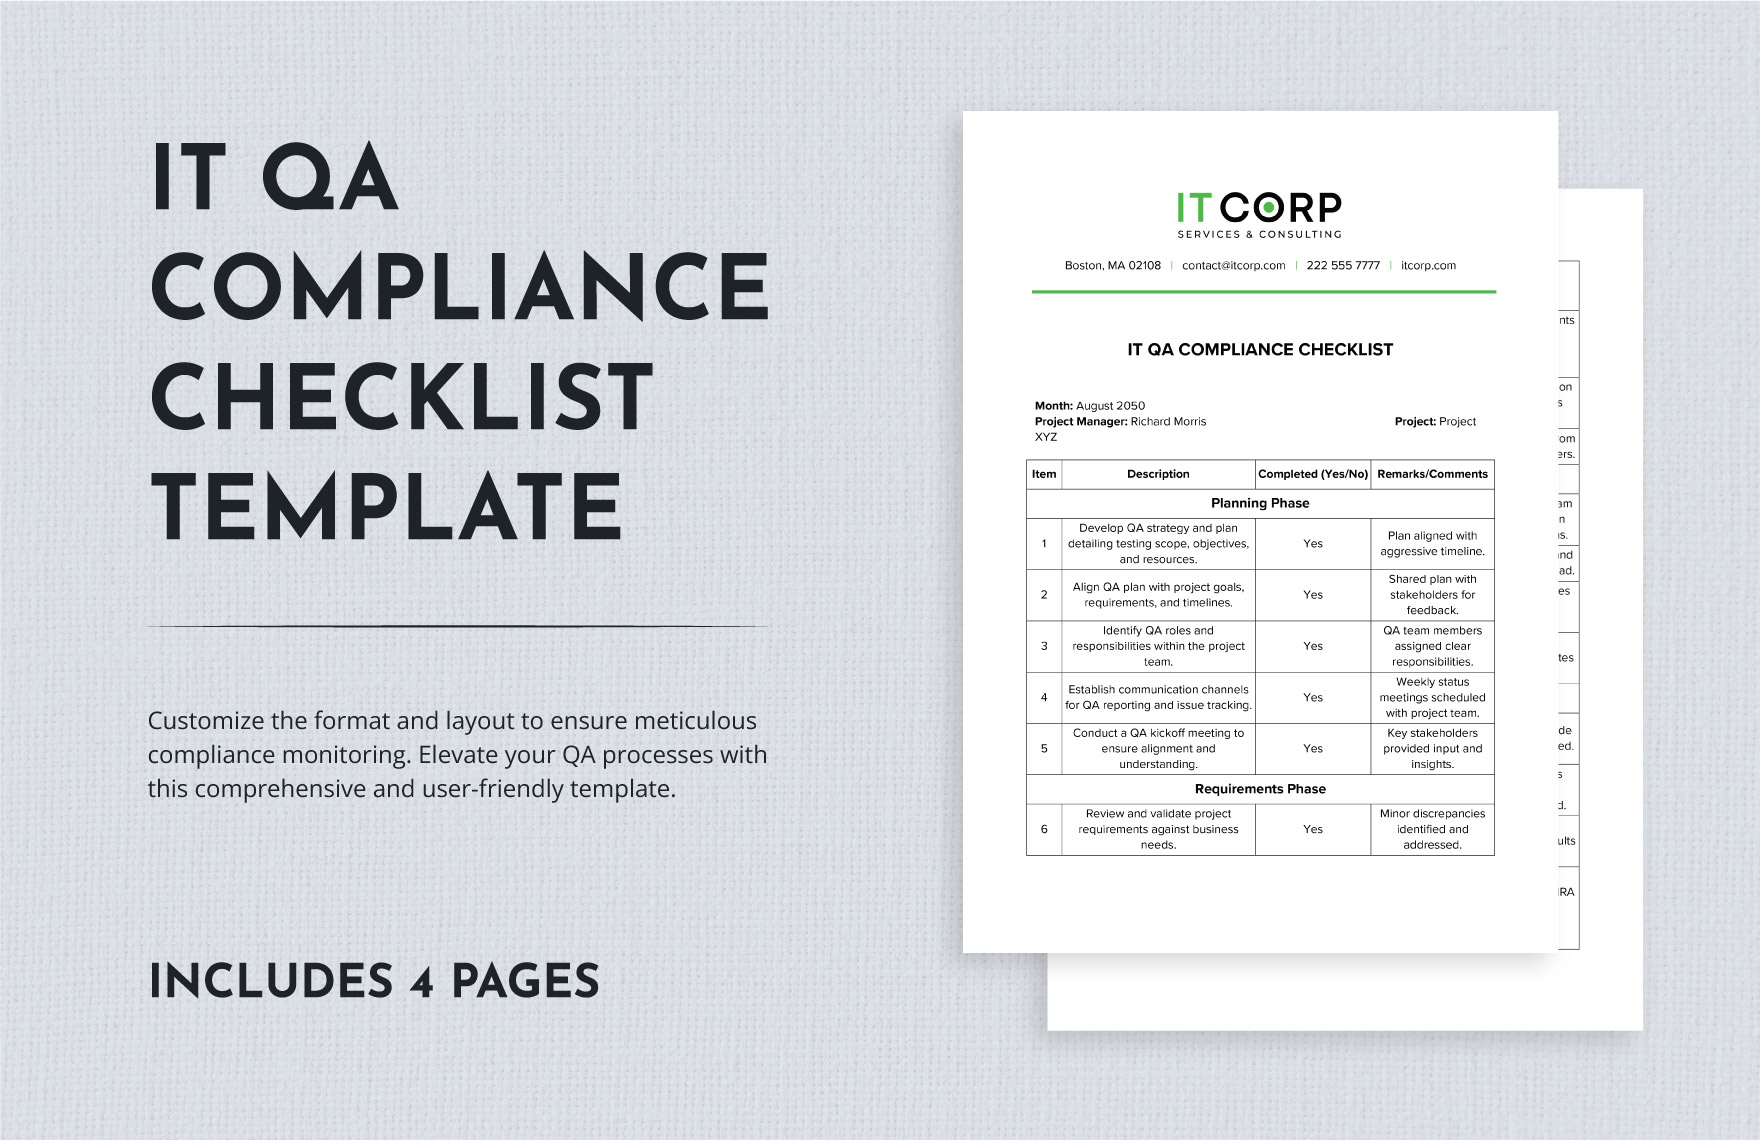 IT QA Compliance Checklist Template in Word, Google Docs, PDF